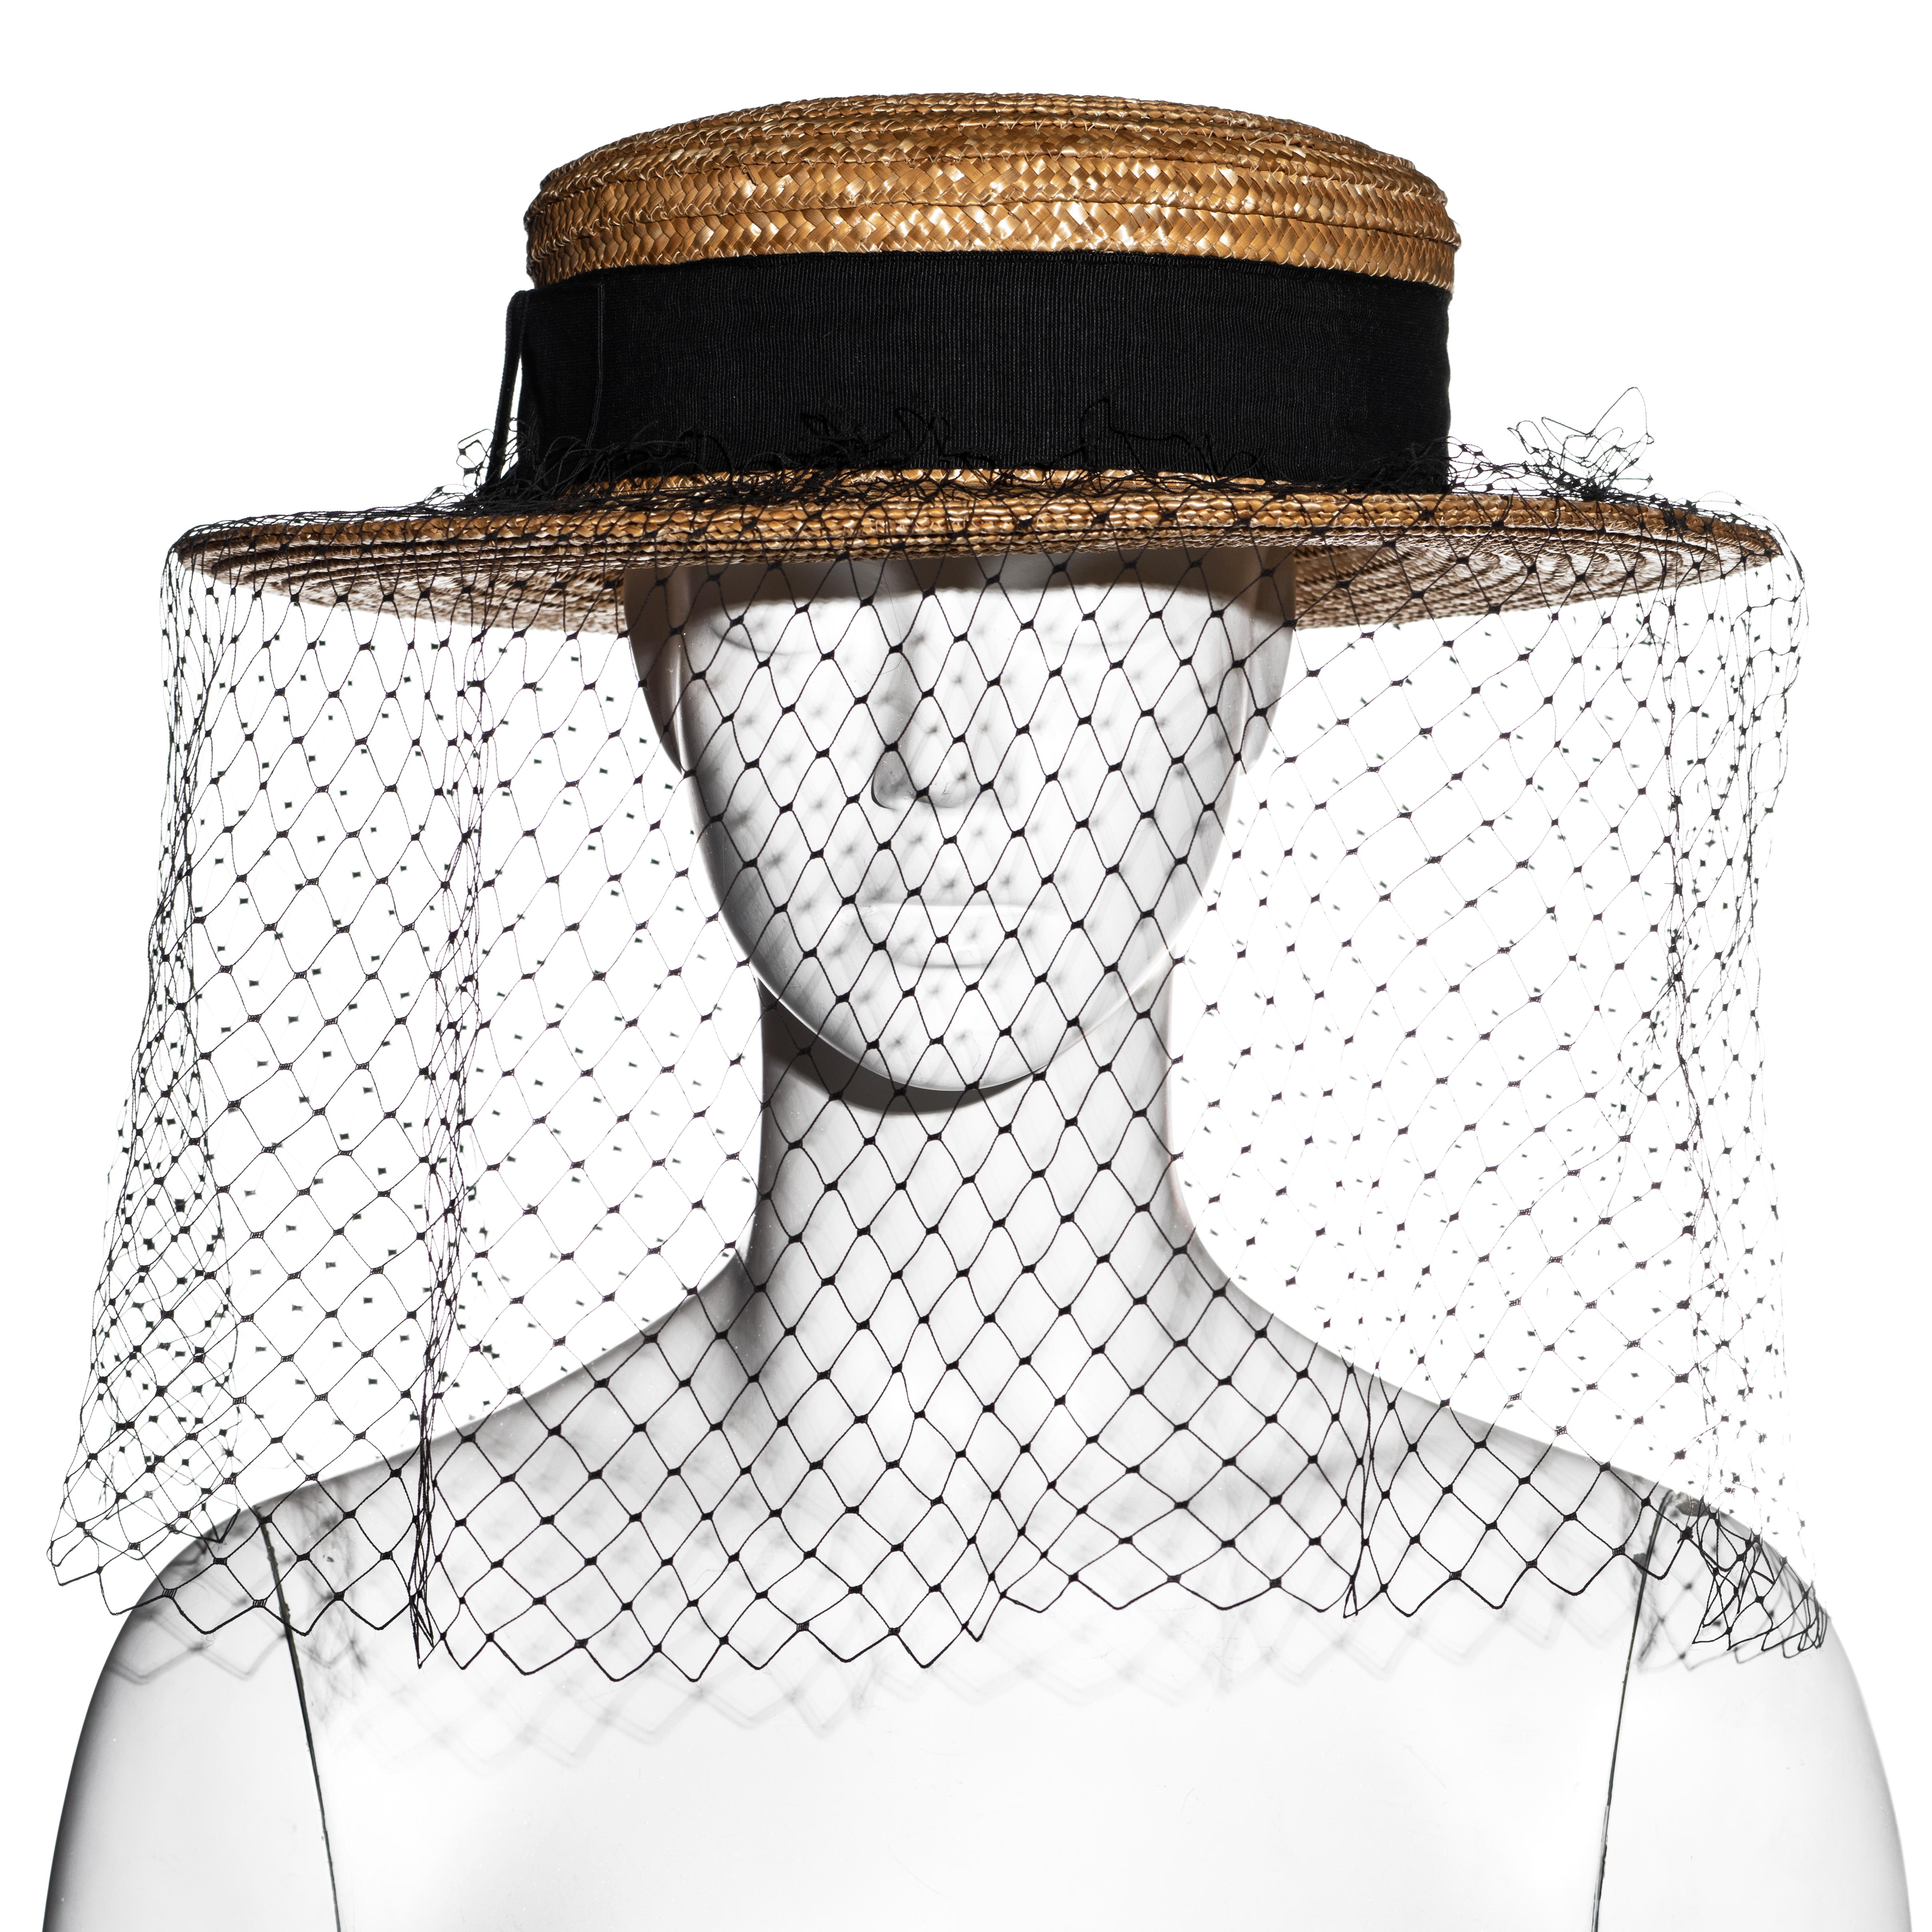 ▪ Vivienne Westwood raffia boater hat 
▪ Black grosgrain ribbon with bow
▪ Black fishnet veil 
▪ Size Medium
▪ Spring-Summer 1988